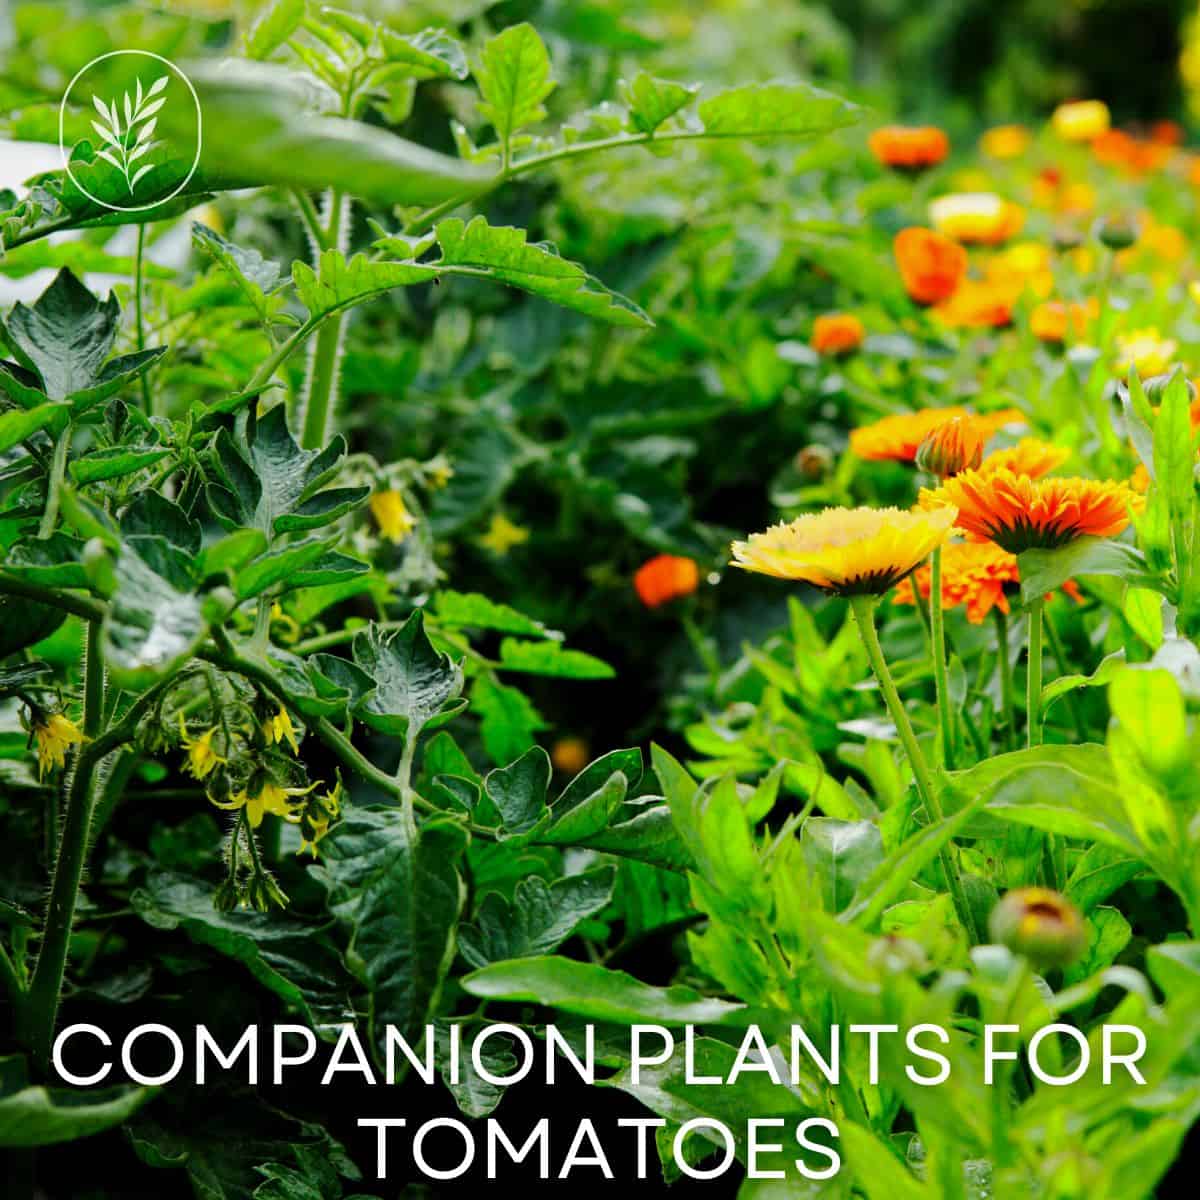 Companion plants for tomatoes via @home4theharvest